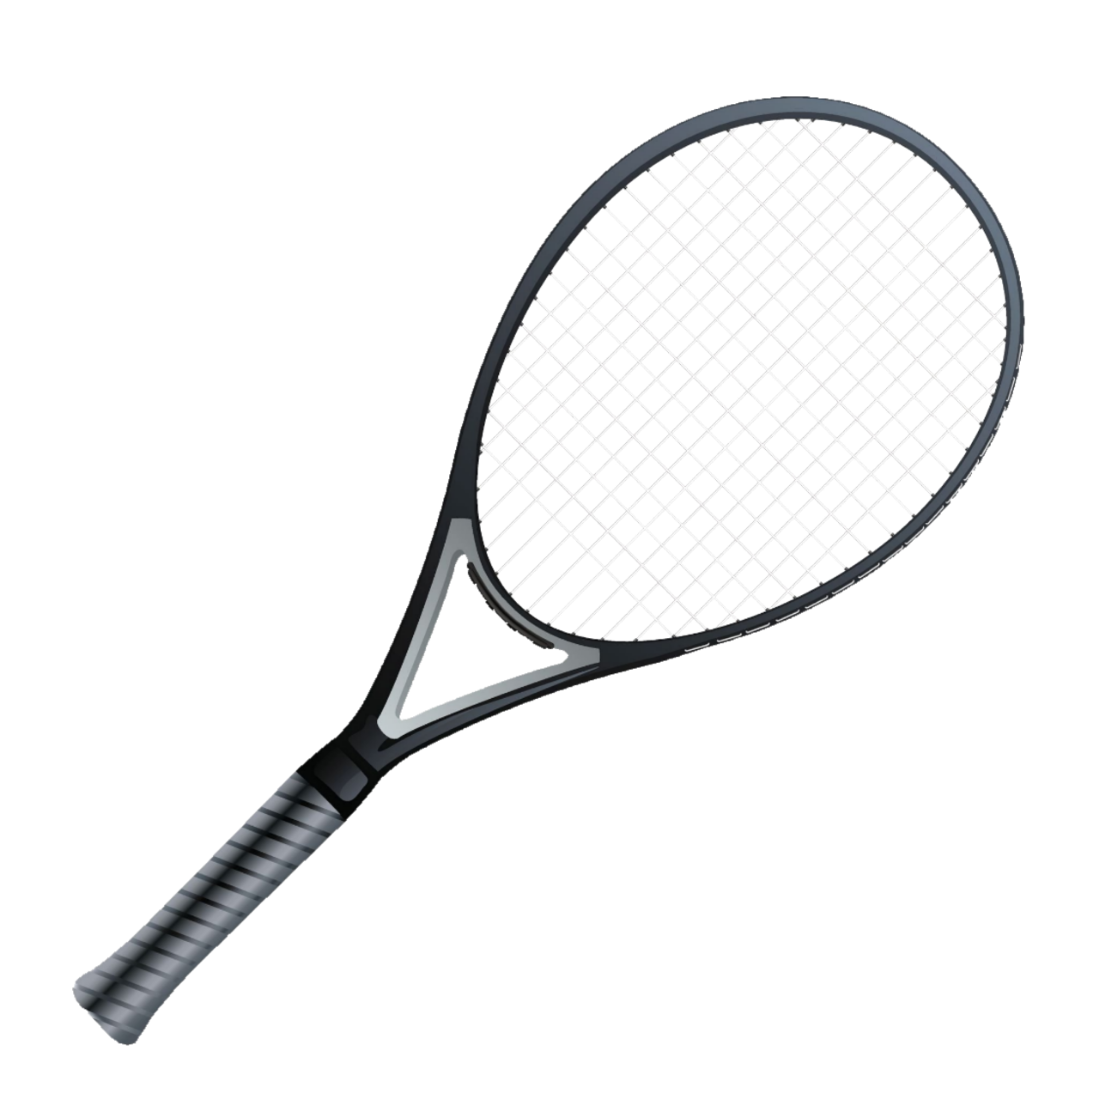 tennis-racket-33